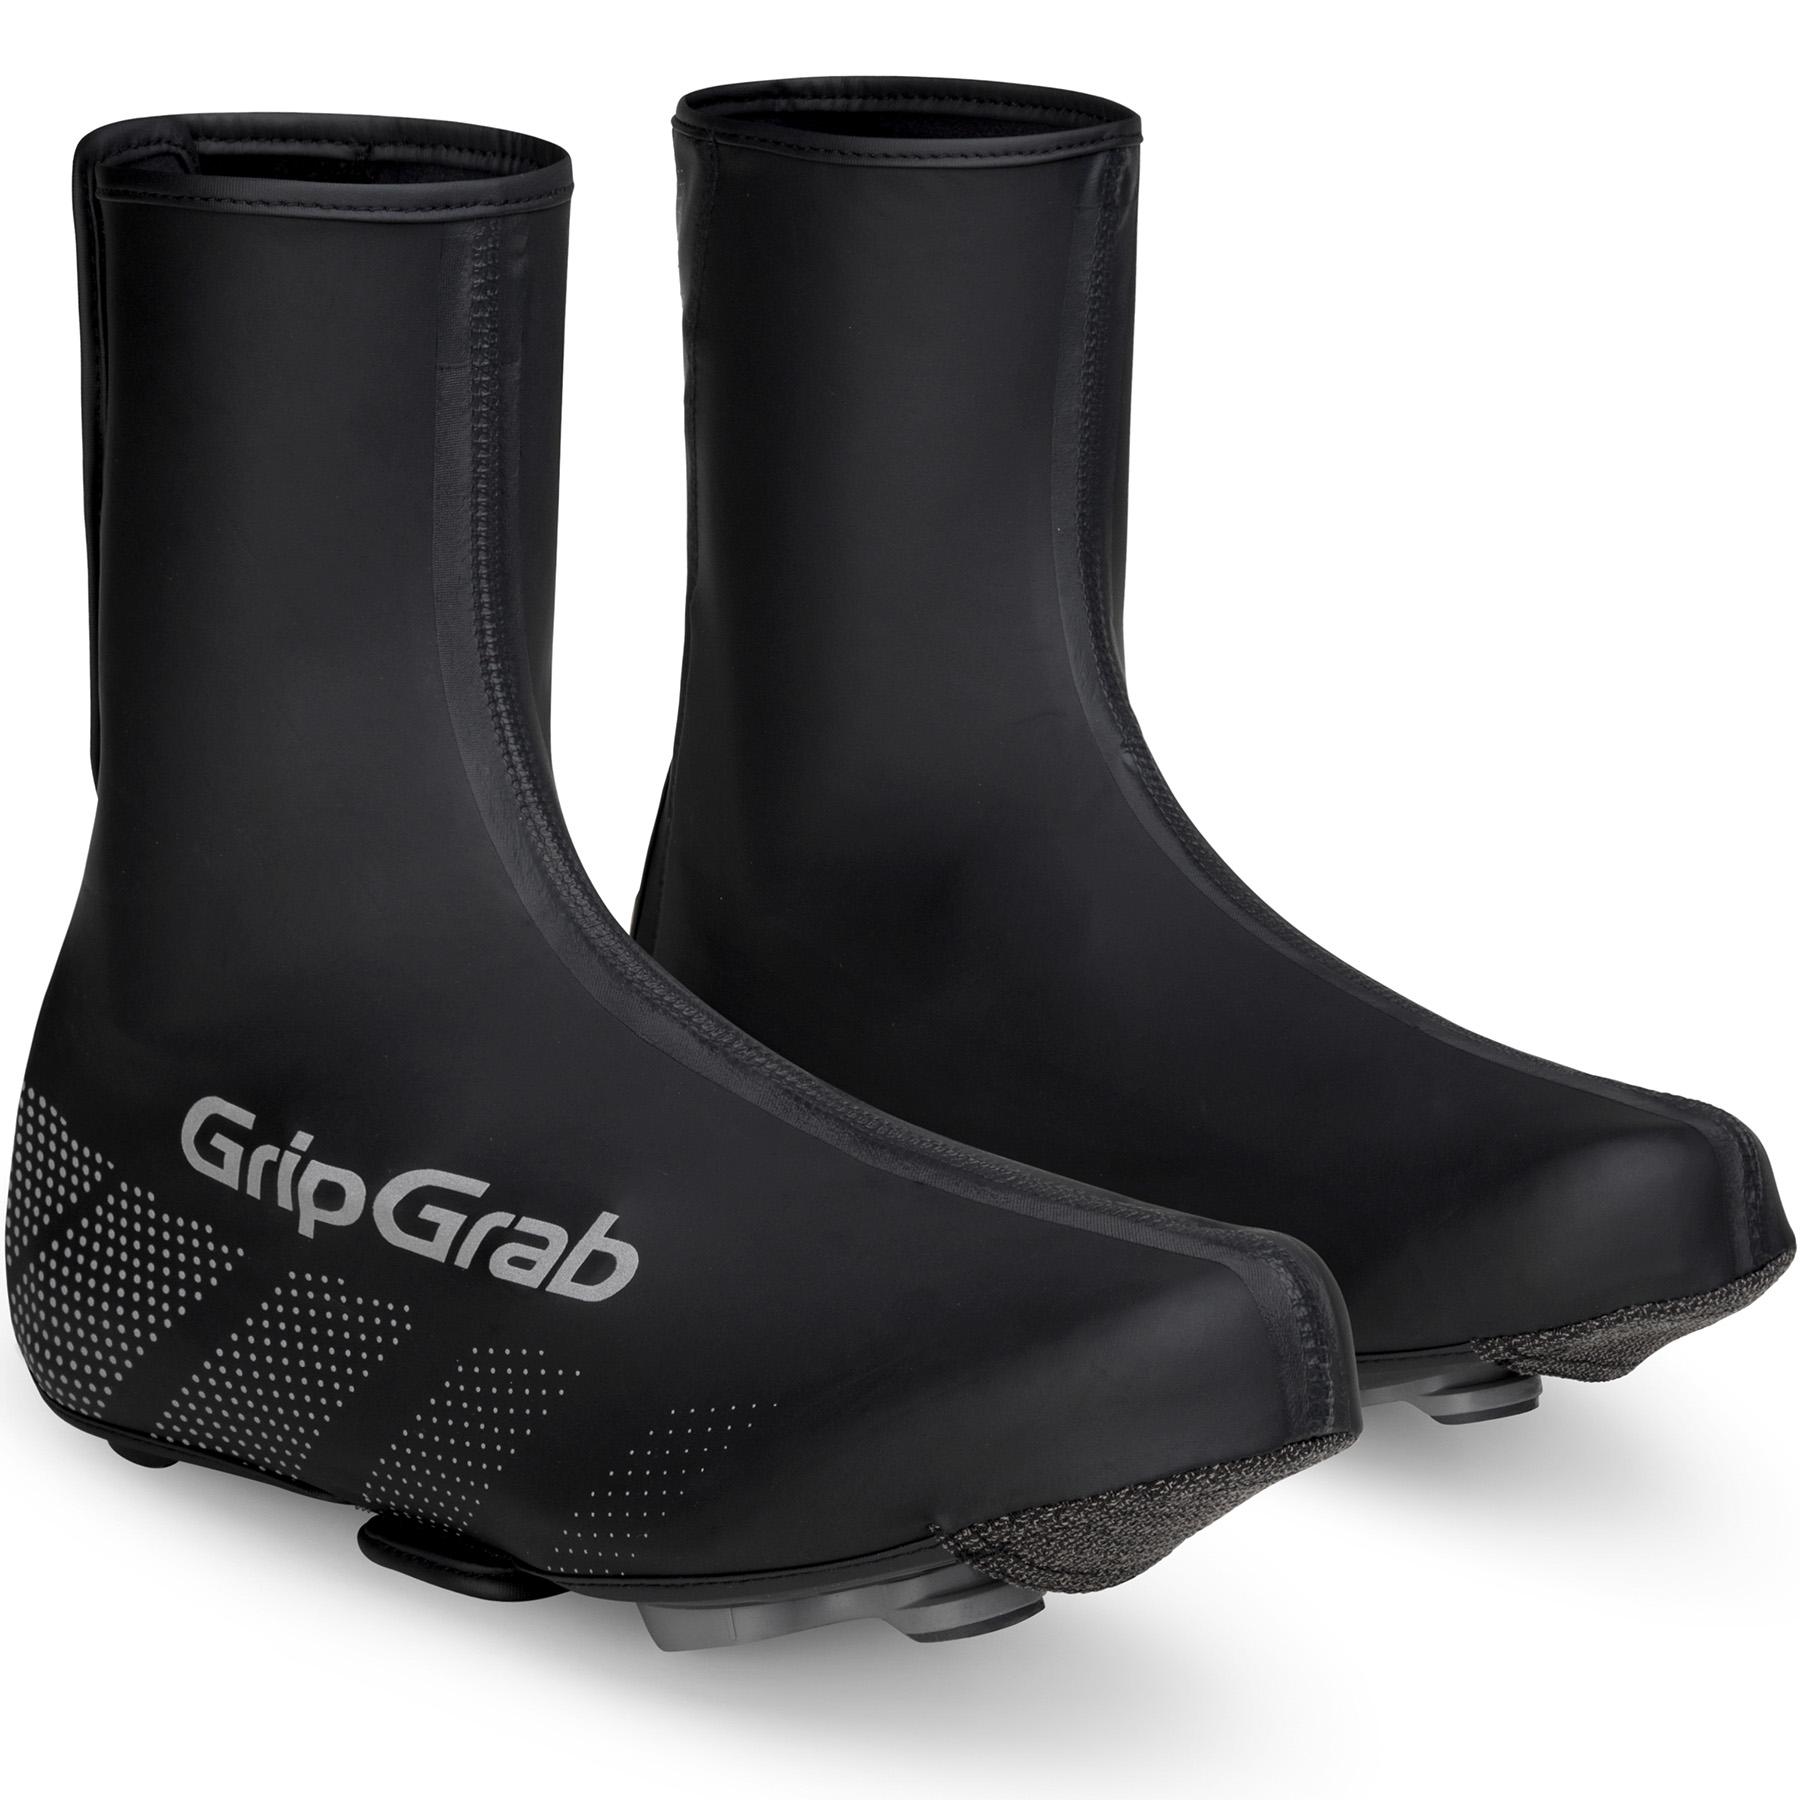 Gripgrab Ride Waterproof Shoe Cover - Black